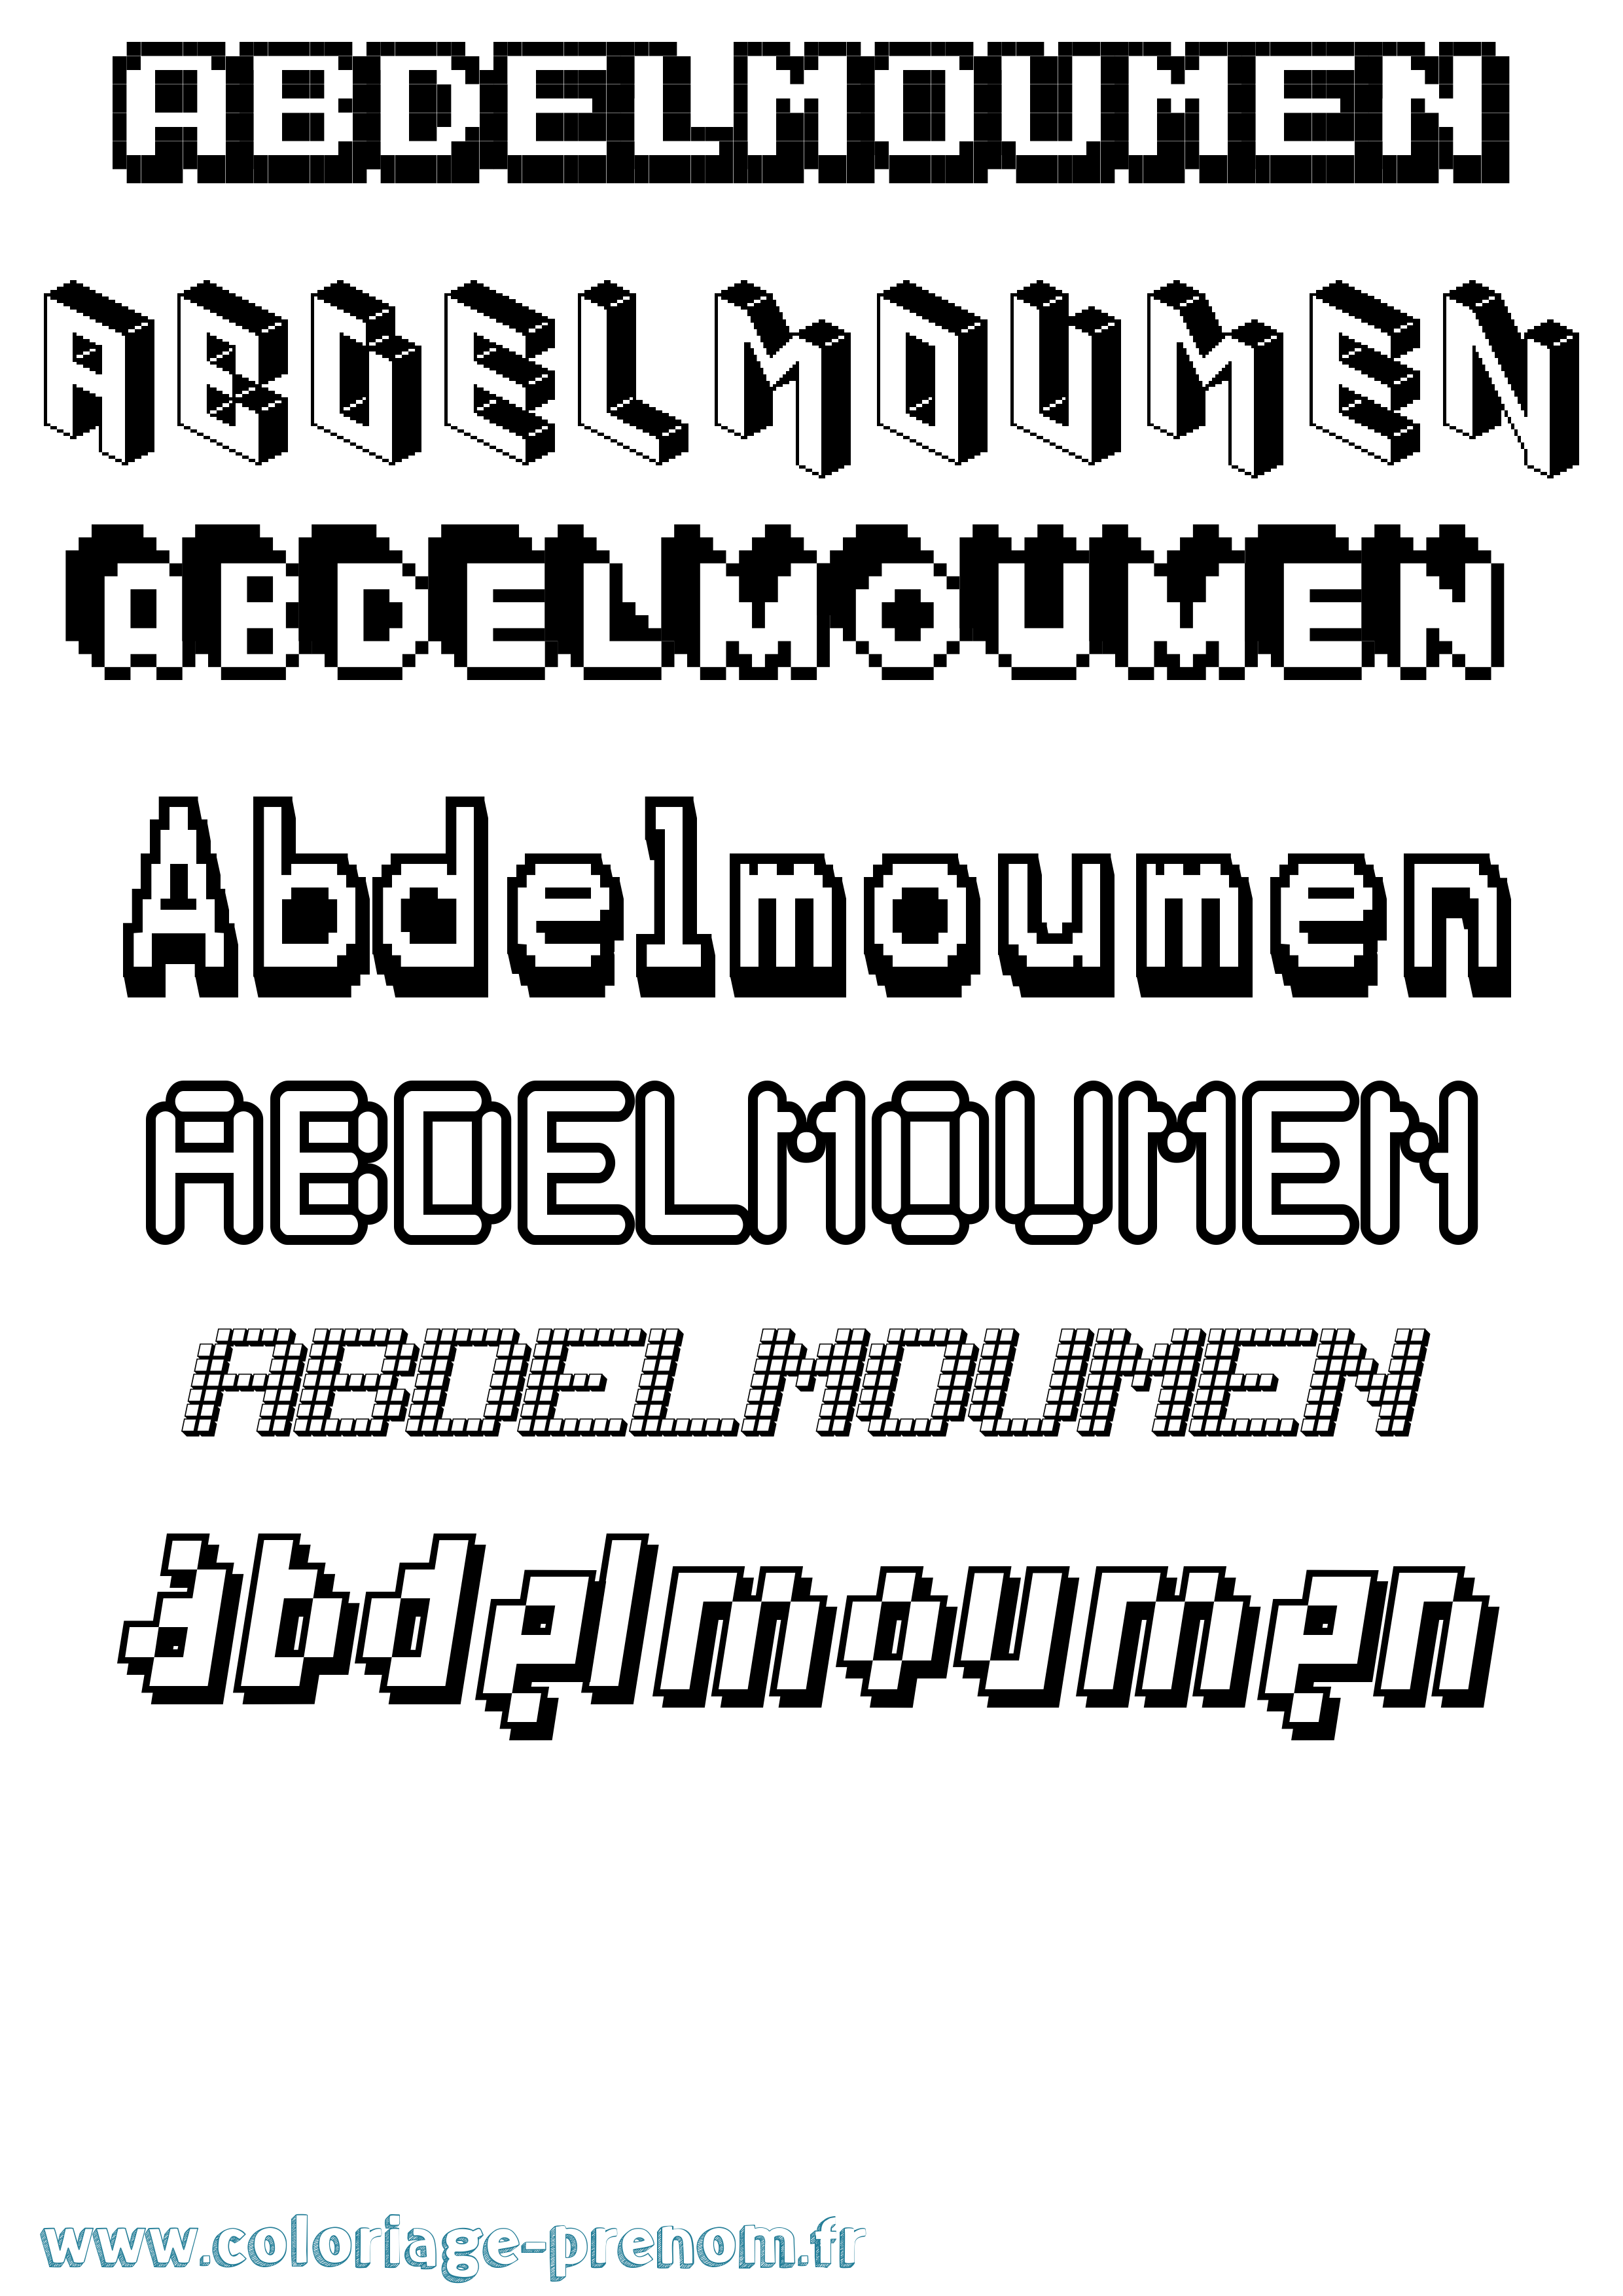 Coloriage prénom Abdelmoumen Pixel